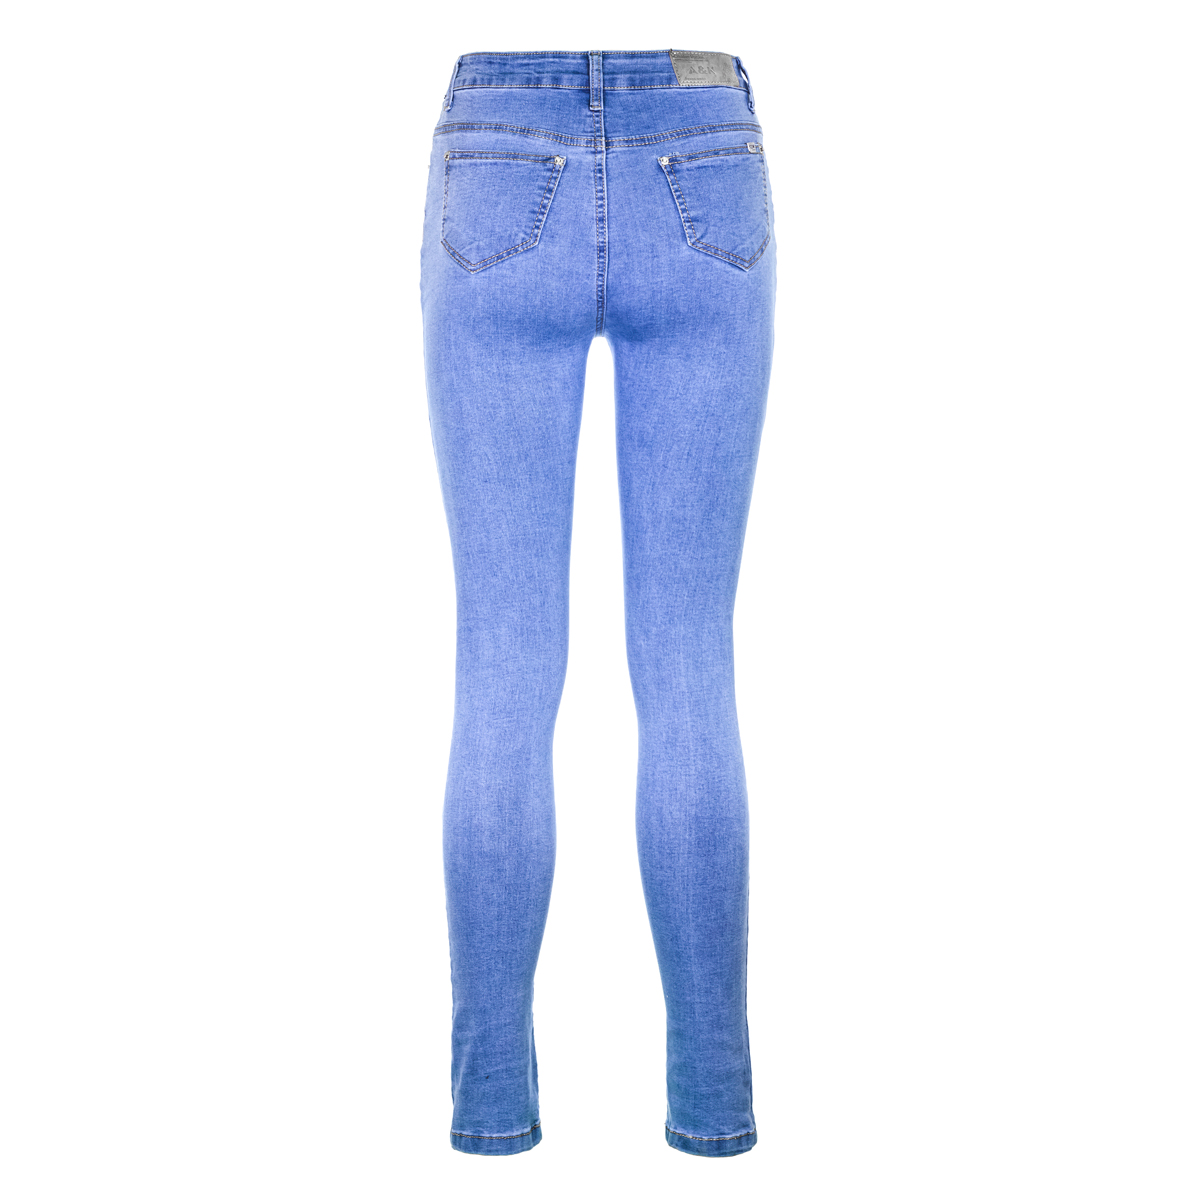 Жен. джинсы арт. 12-0155 Голубой р. 25 Китай, размер 25 - фото 3